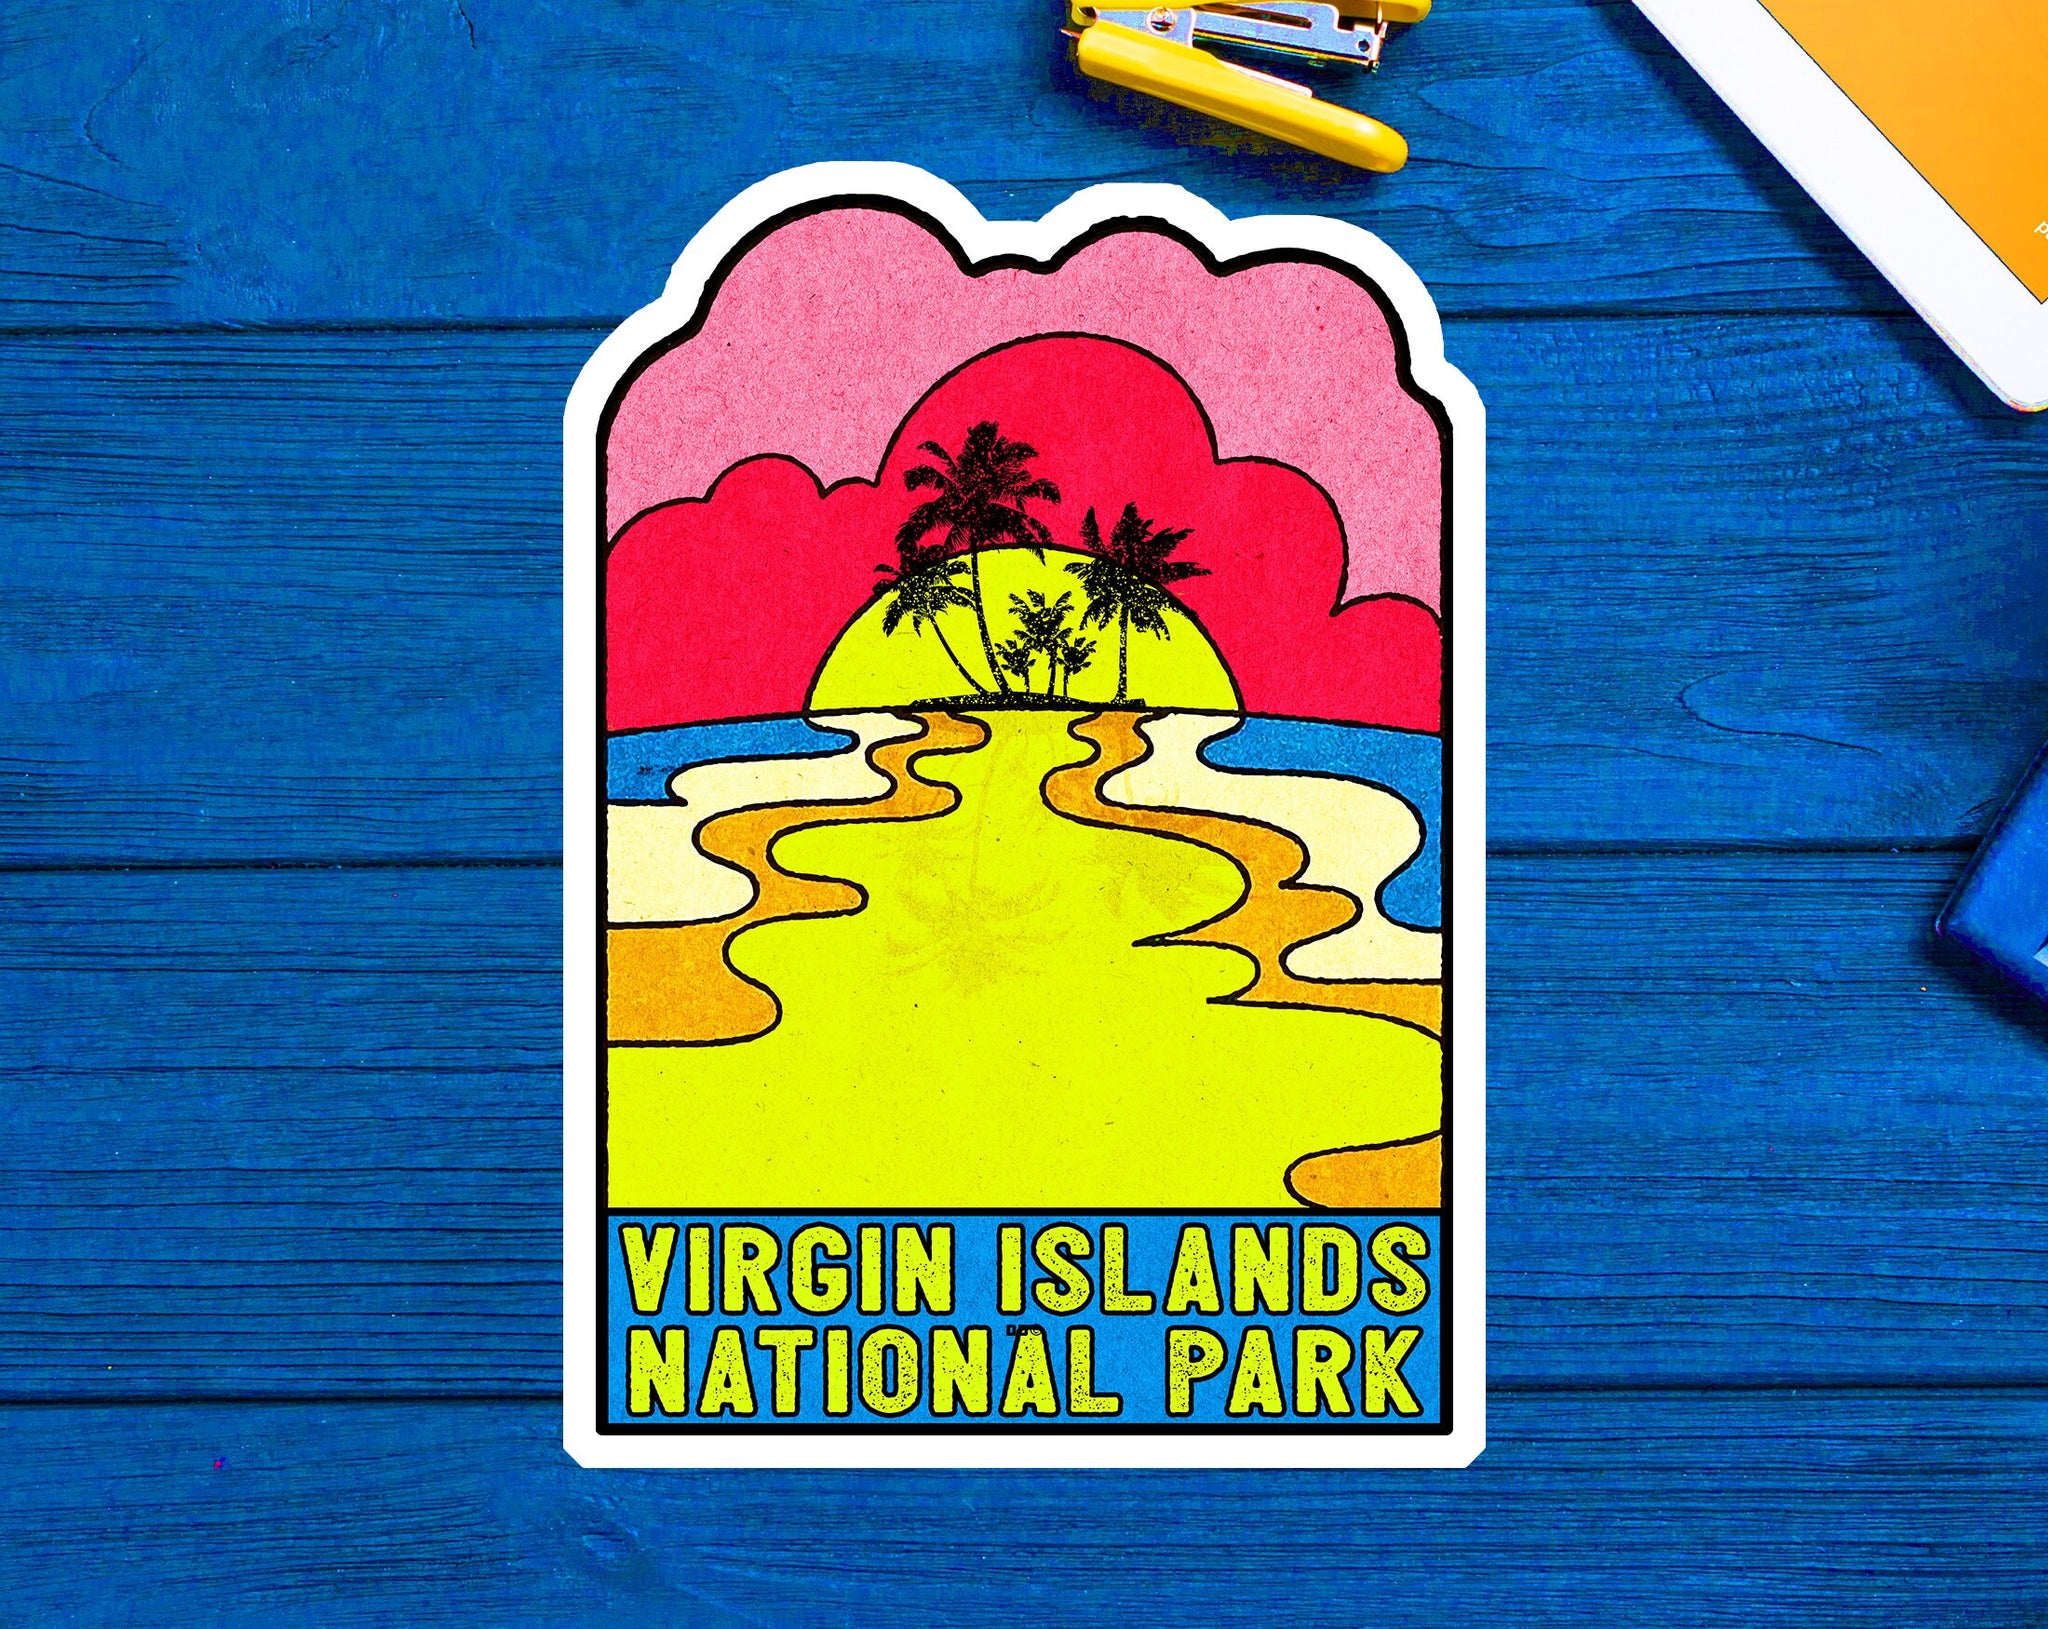 Virgin Islands National Park Decal Sticker 3.75" x 2.7" Sunset Palm Trees United States Saint Thomas Croix John